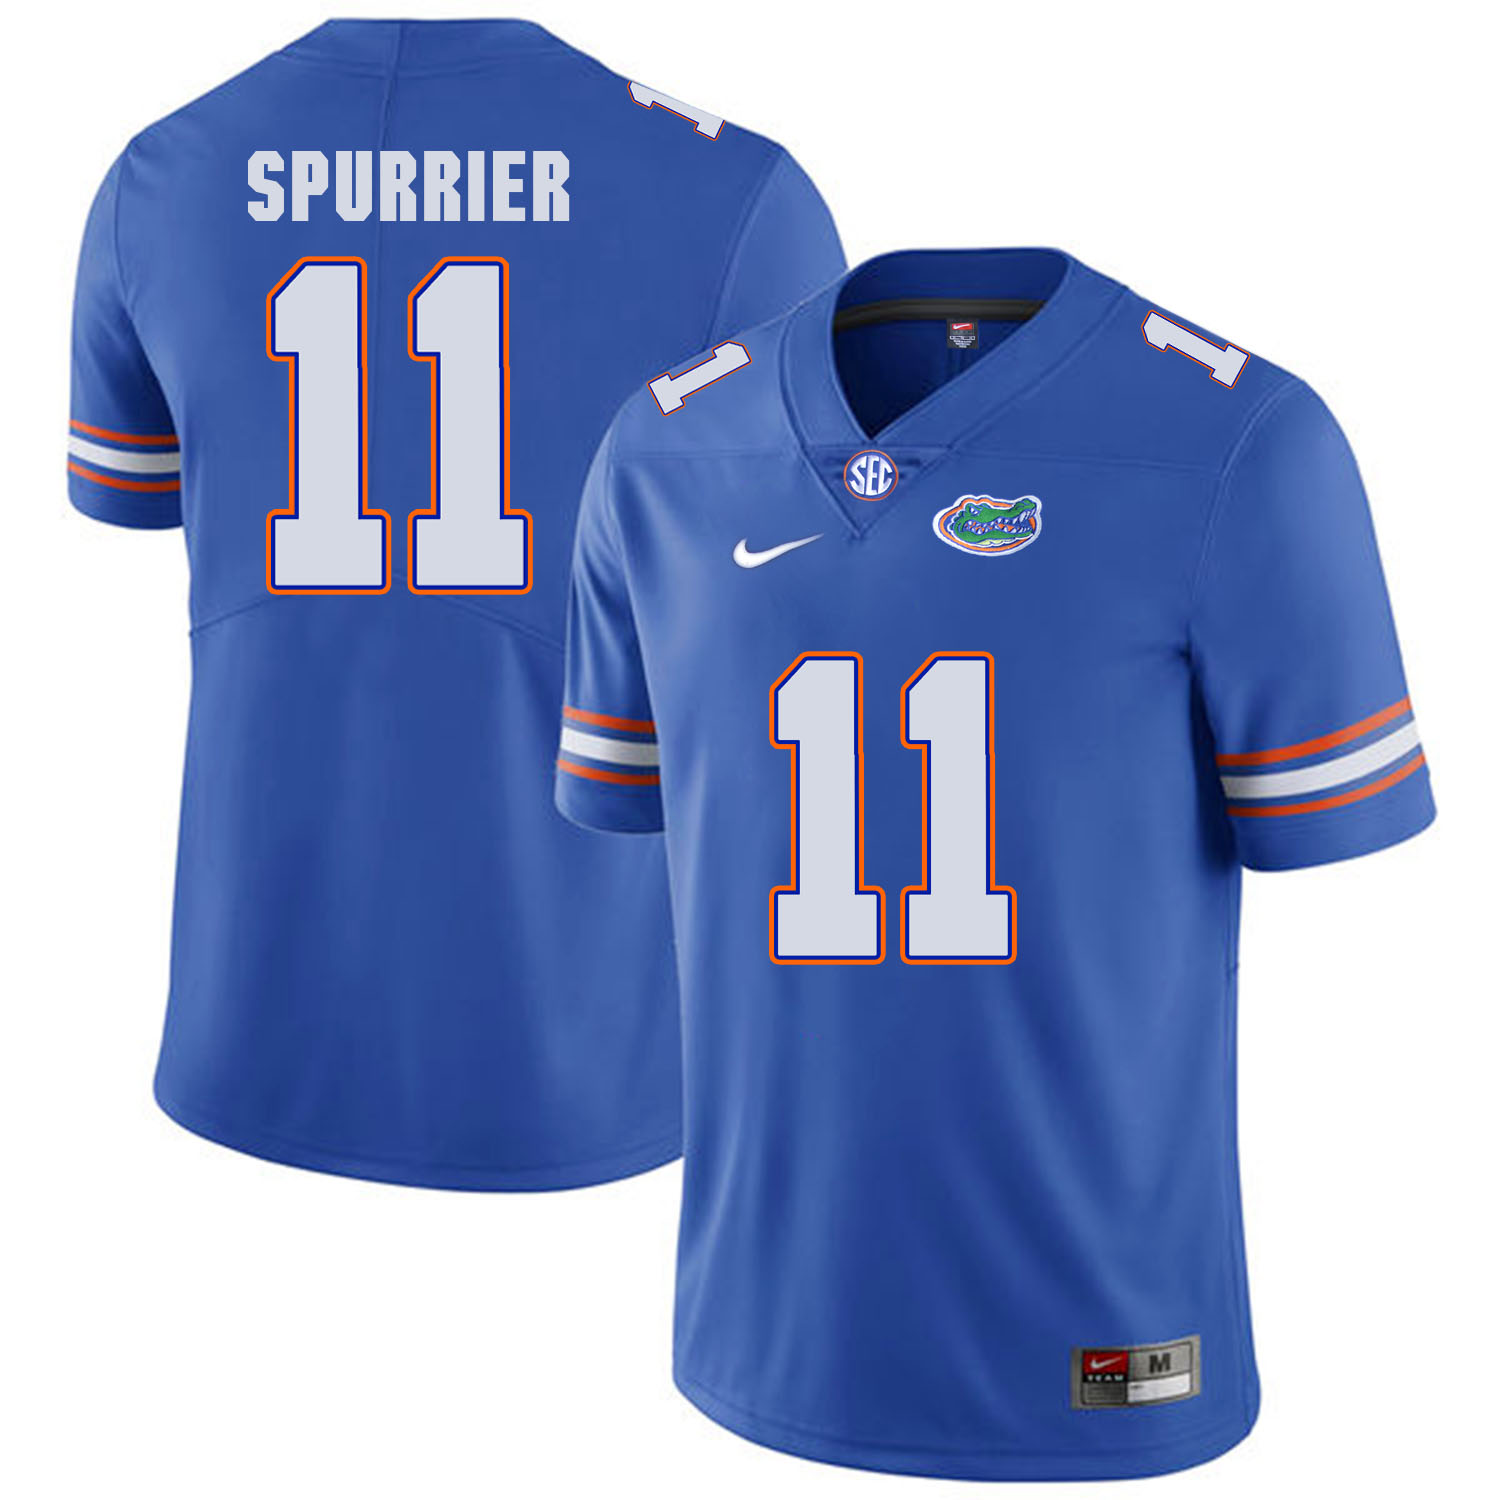 Florida Gators 11 Steve Spurrier Blue College Football Jersey